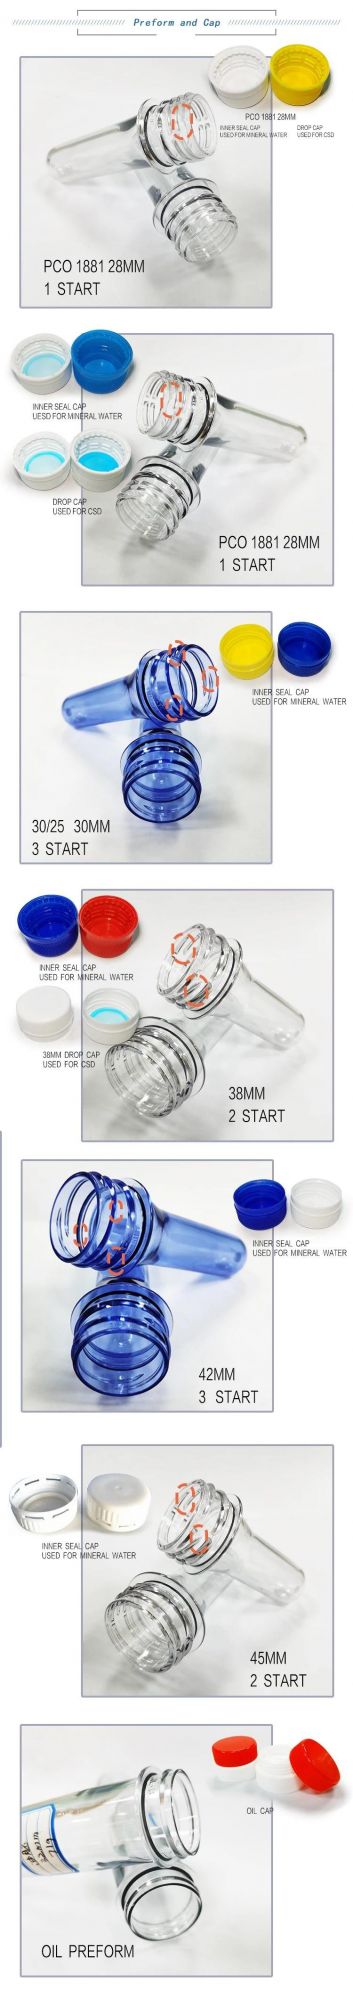 China Pco 1880 1881 28mm 30mm 38mm 45mm 48mm 55mm Pet Plastic Water Bottle Preform for Pet Bottle